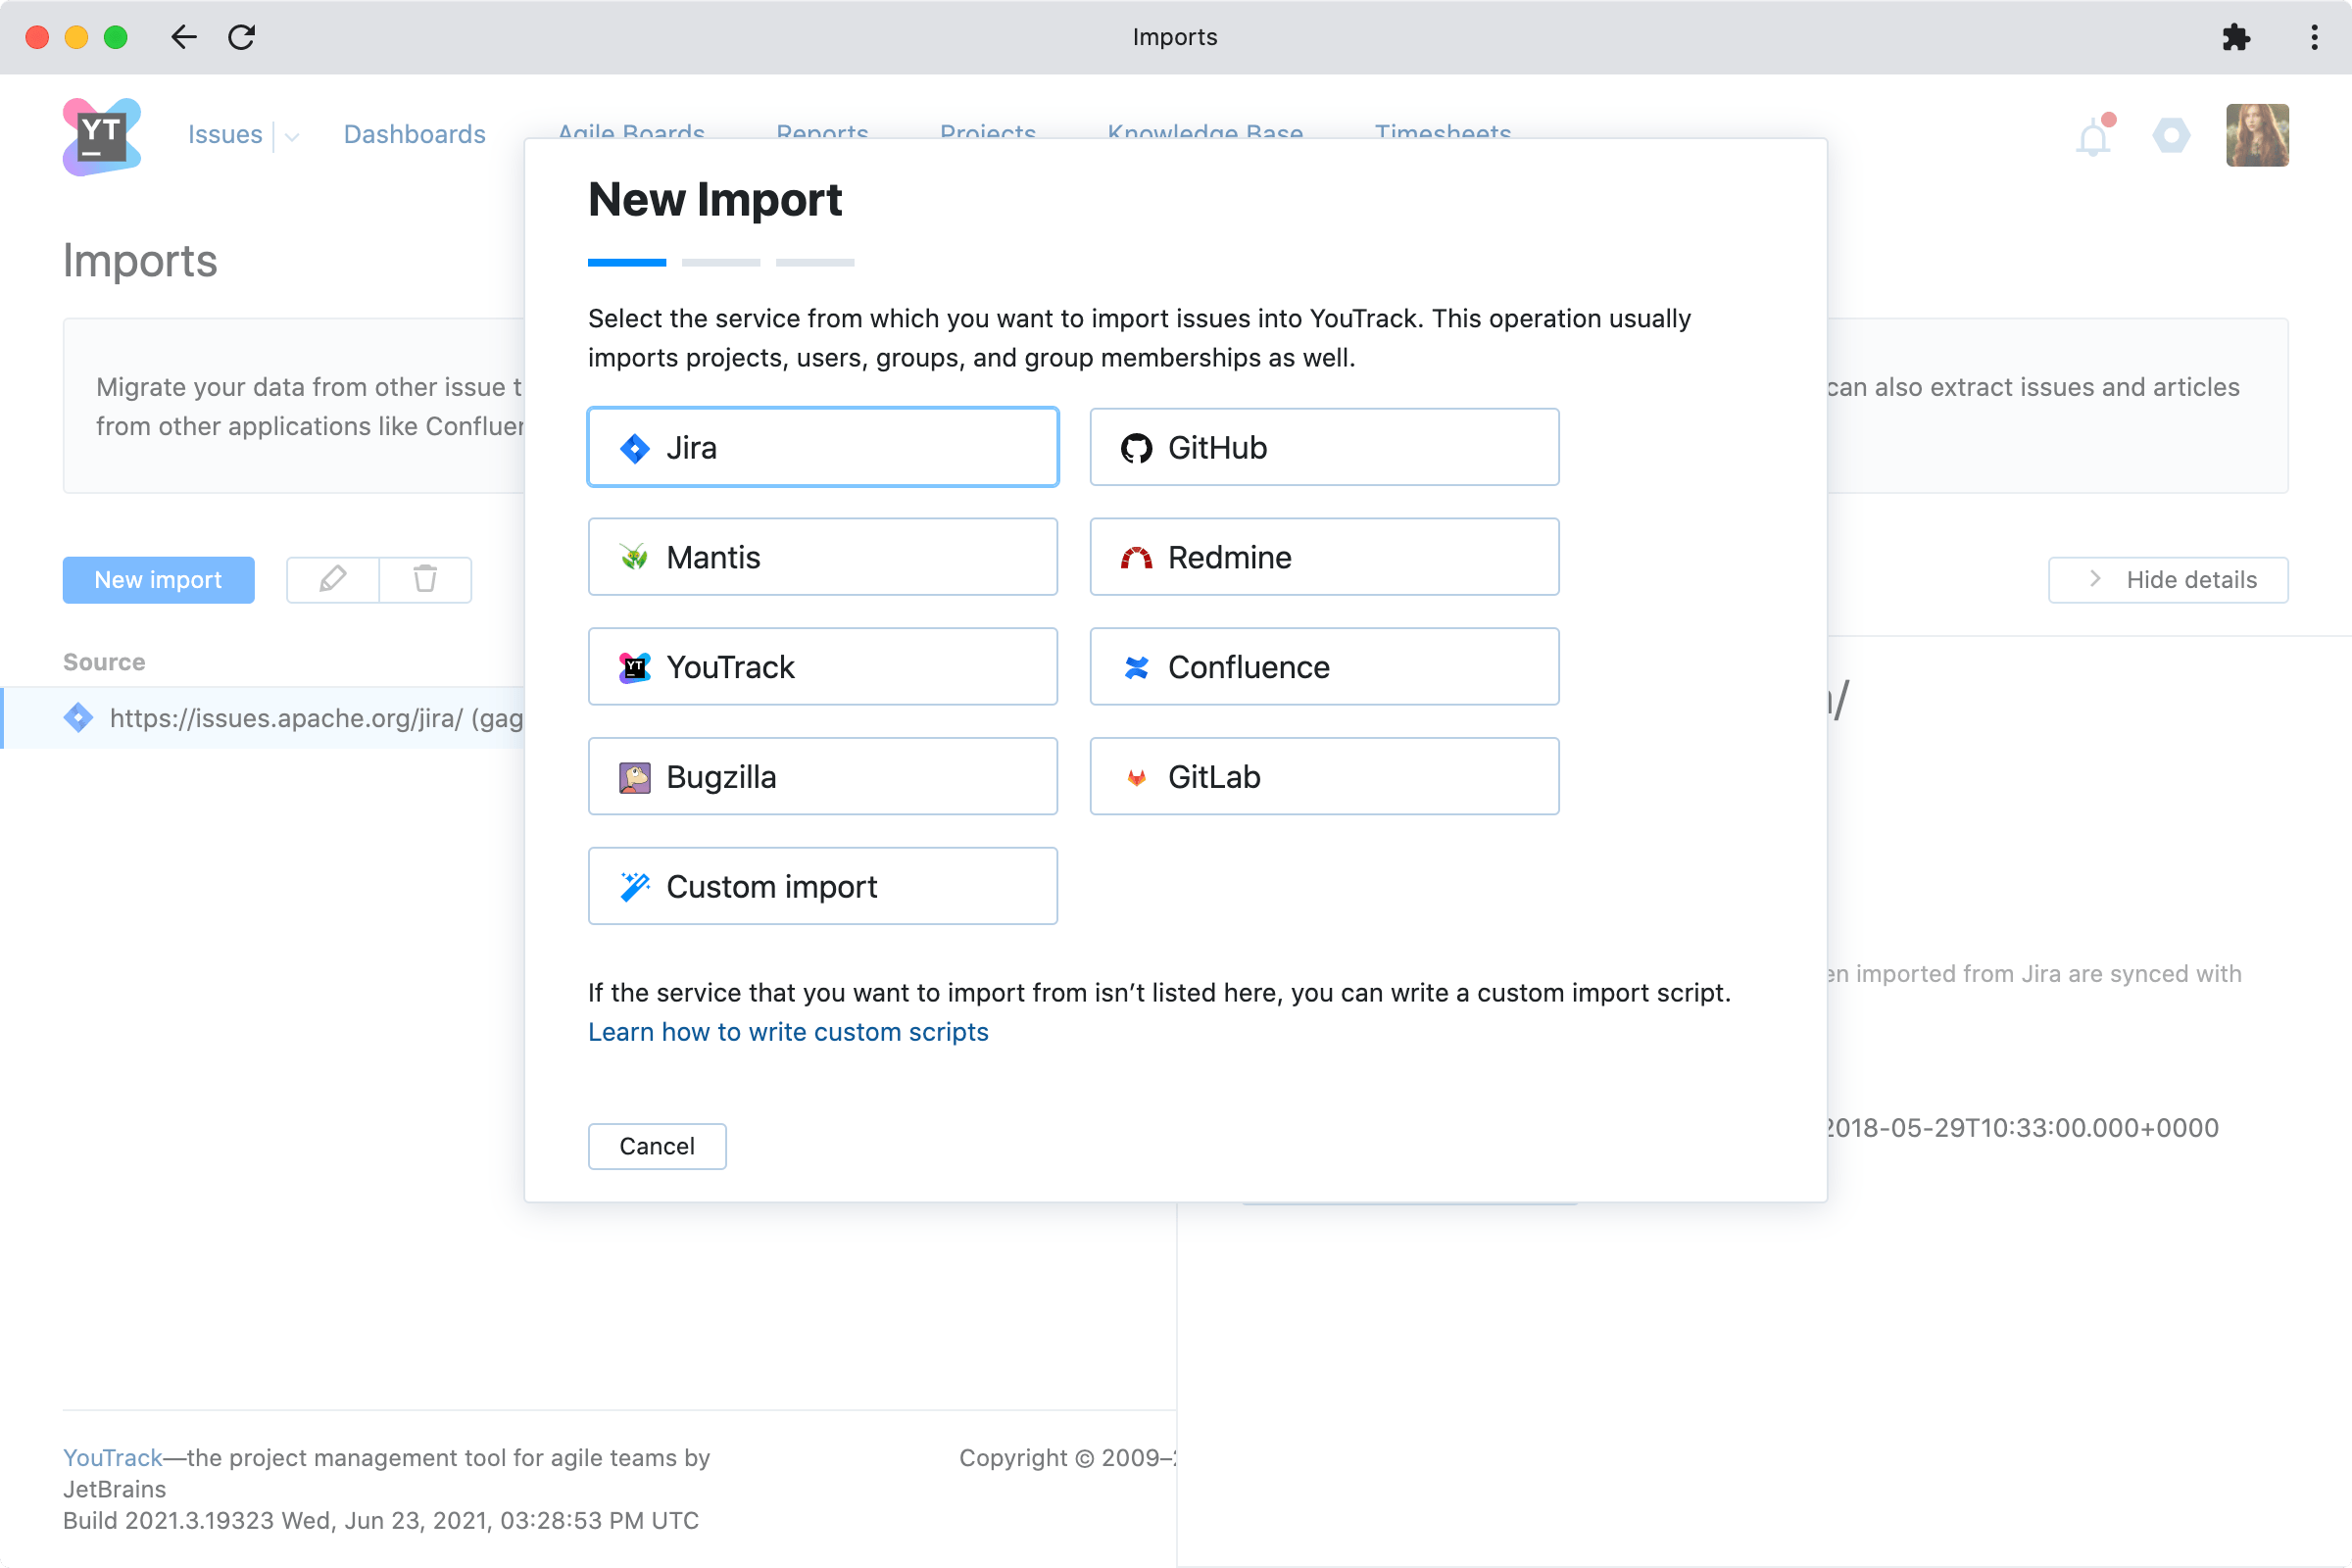 GitLab imports